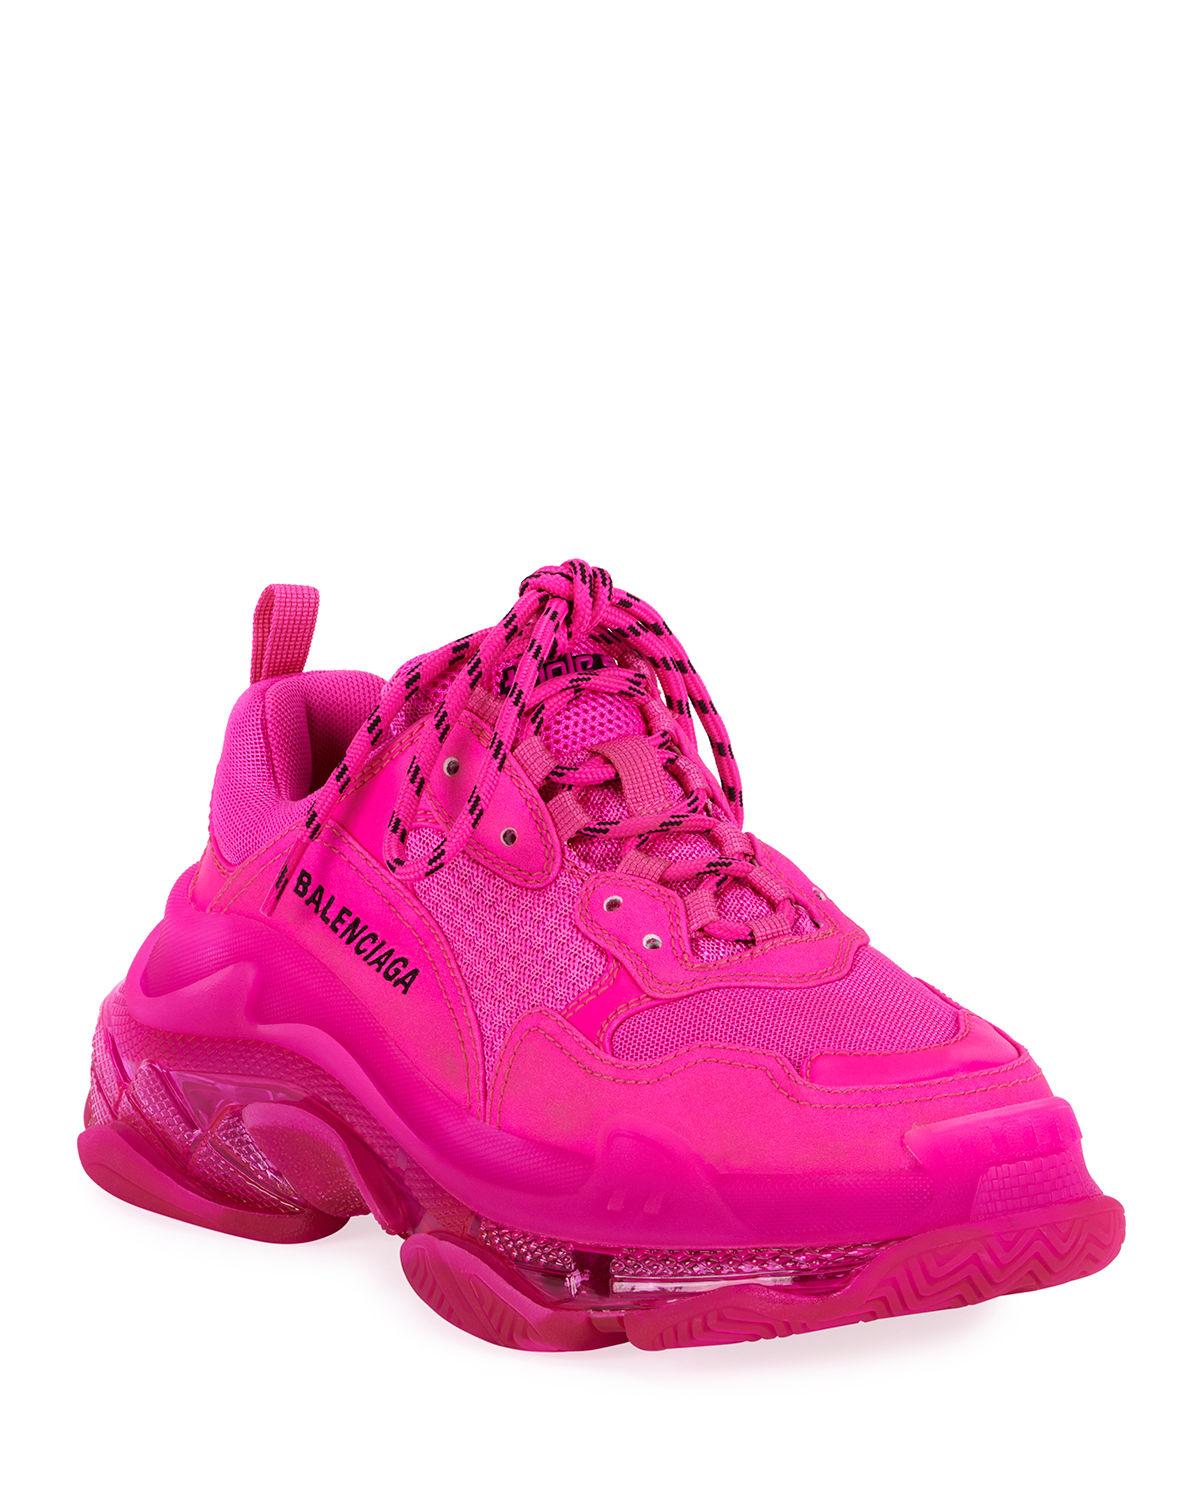 light pink balenciaga sneakers triple s